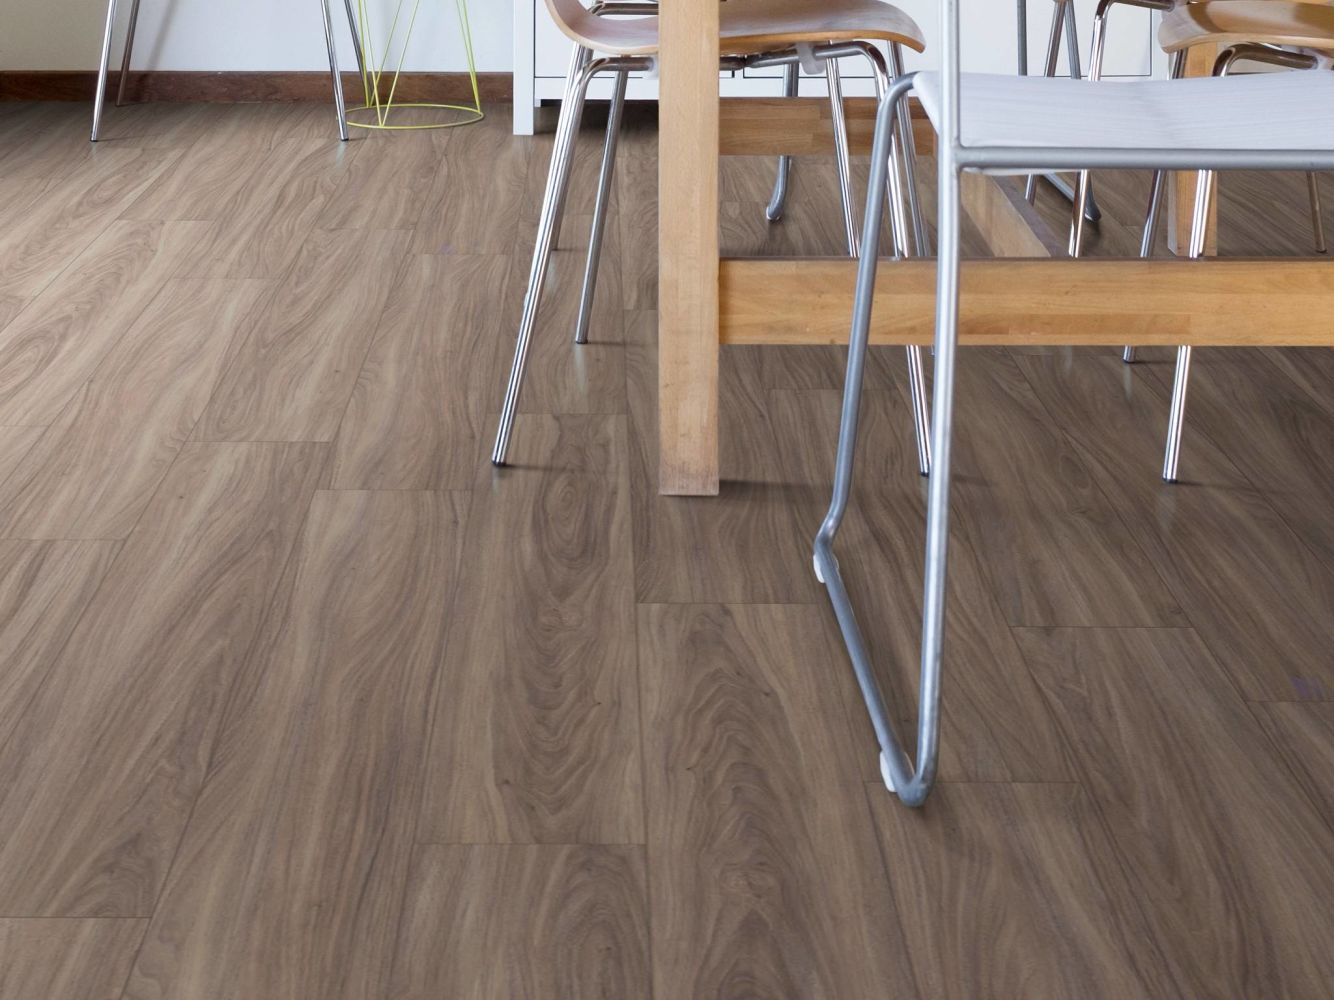 Shaw Floors Resilient Residential Paladin Plus Cinnamon Walnut 00150_0278V